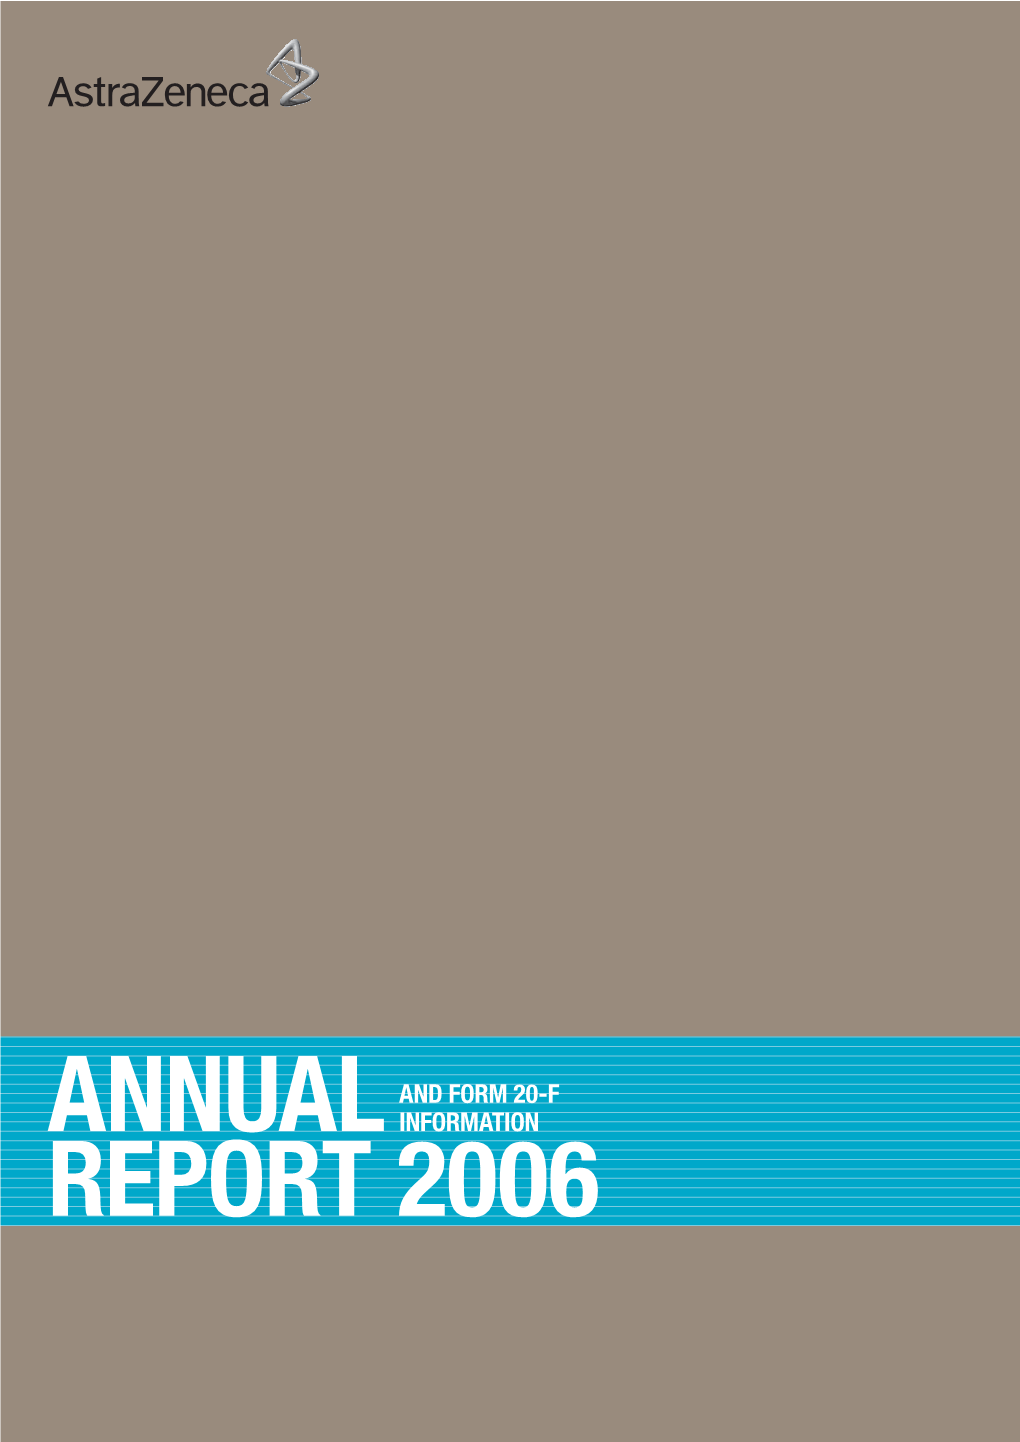 Astrazeneca Annual Report 2006